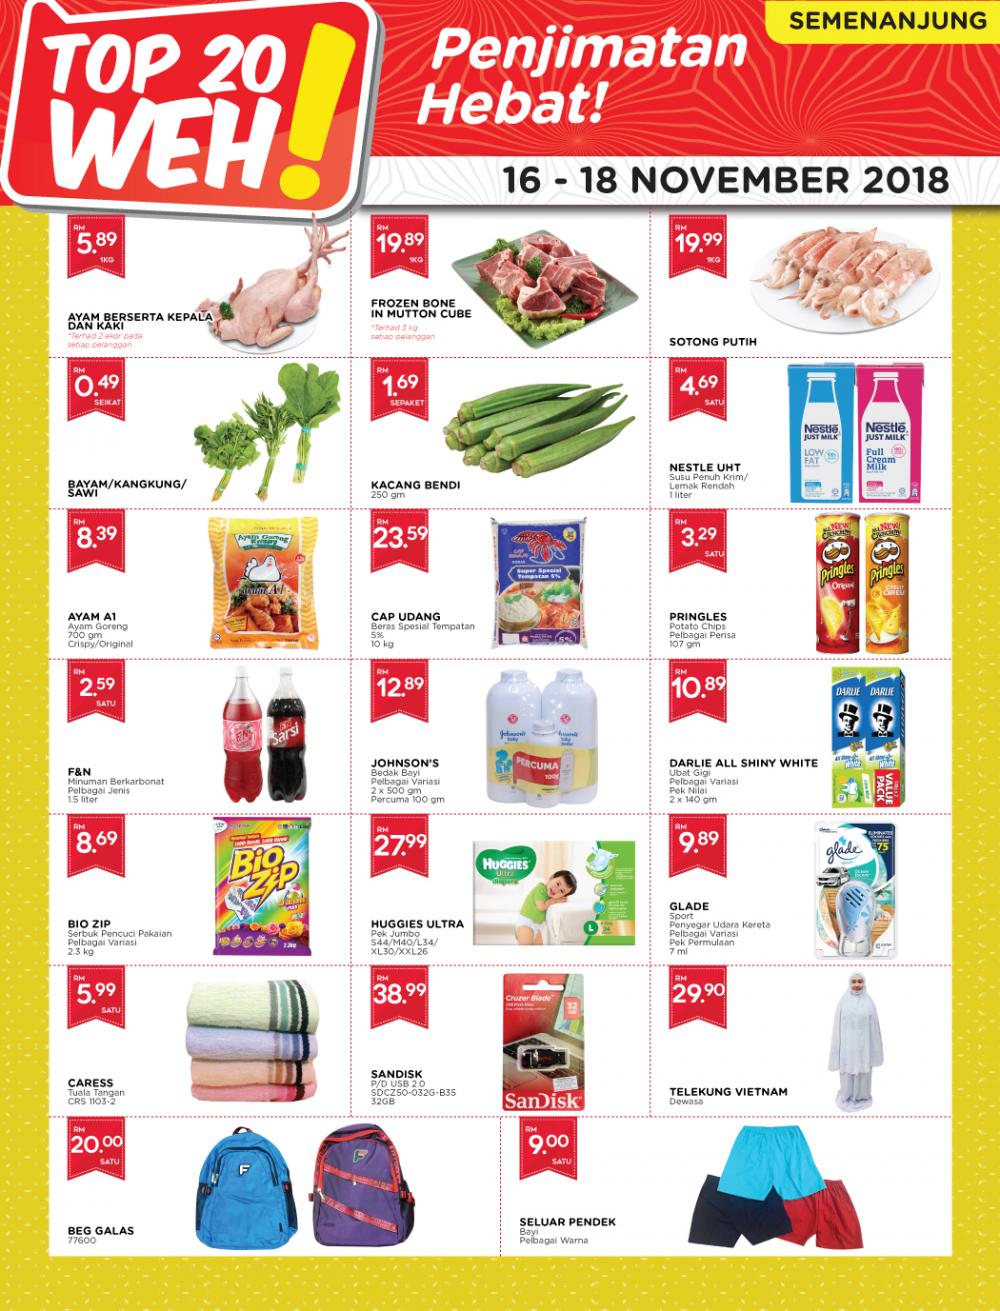 MYDIN TOP 20 WEH Promotion (16 November 2018 - 18 November 2018)